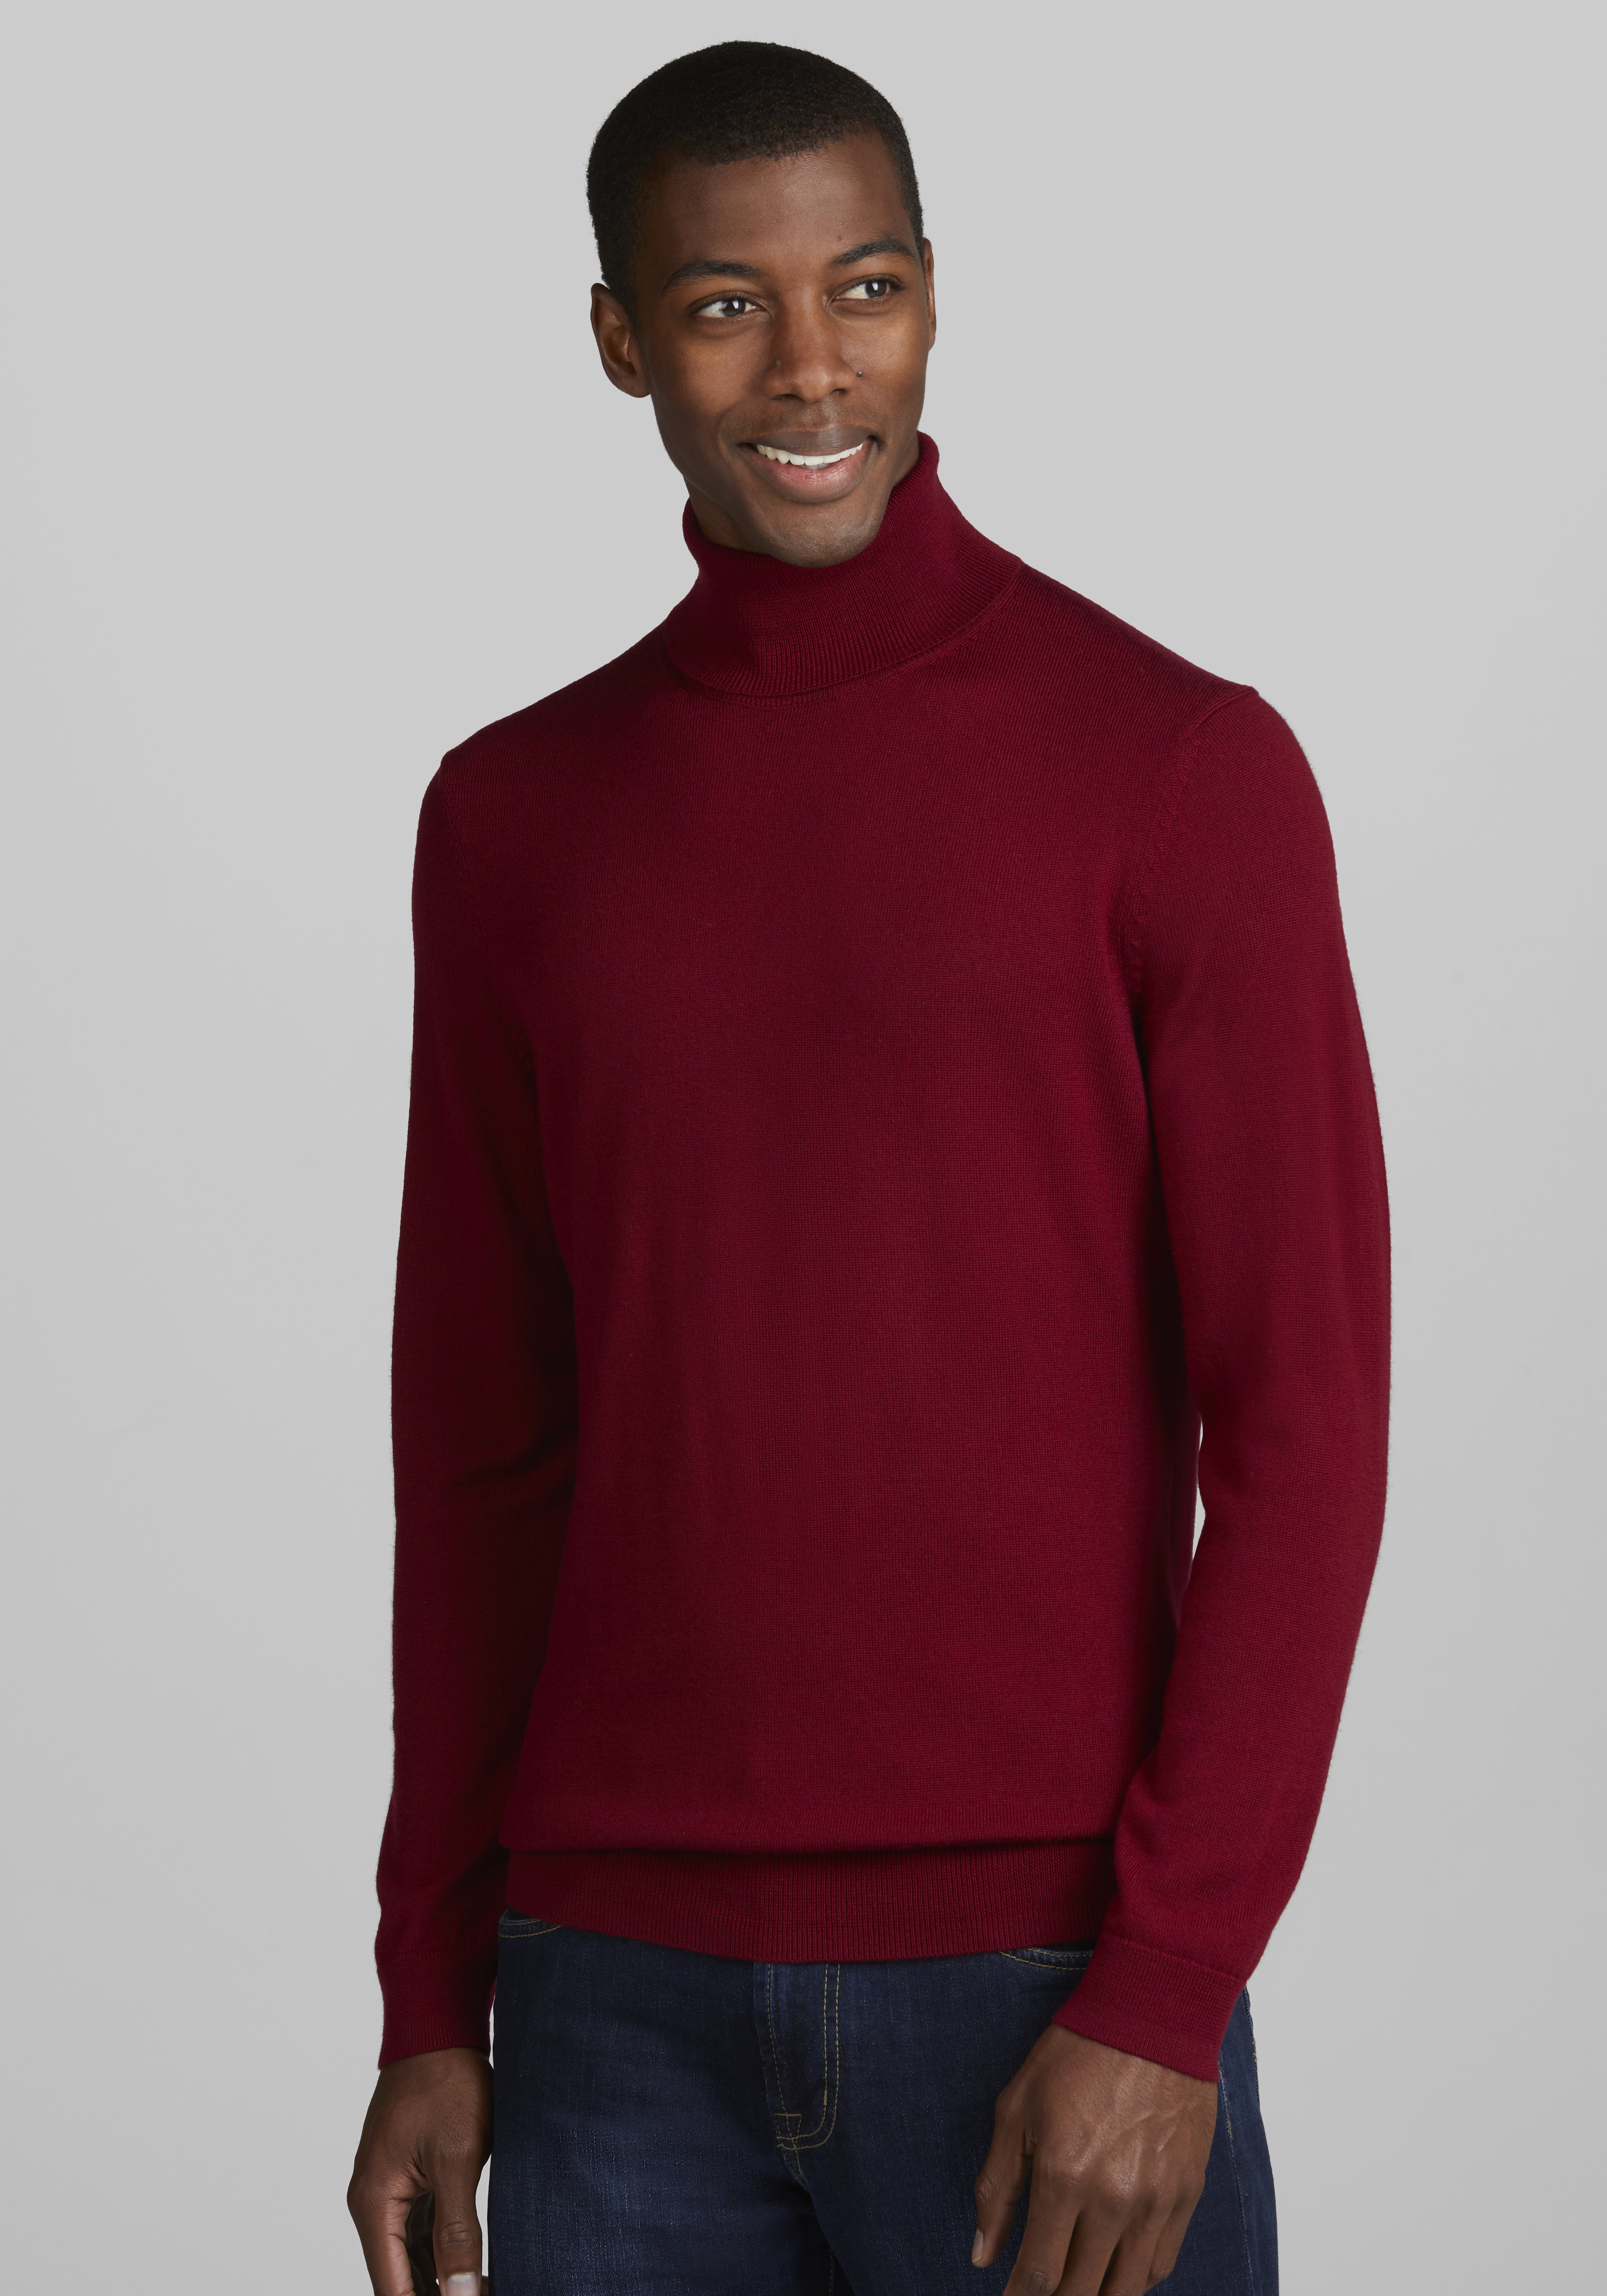 Men's Turtleneck Sweater, Men's Clearance